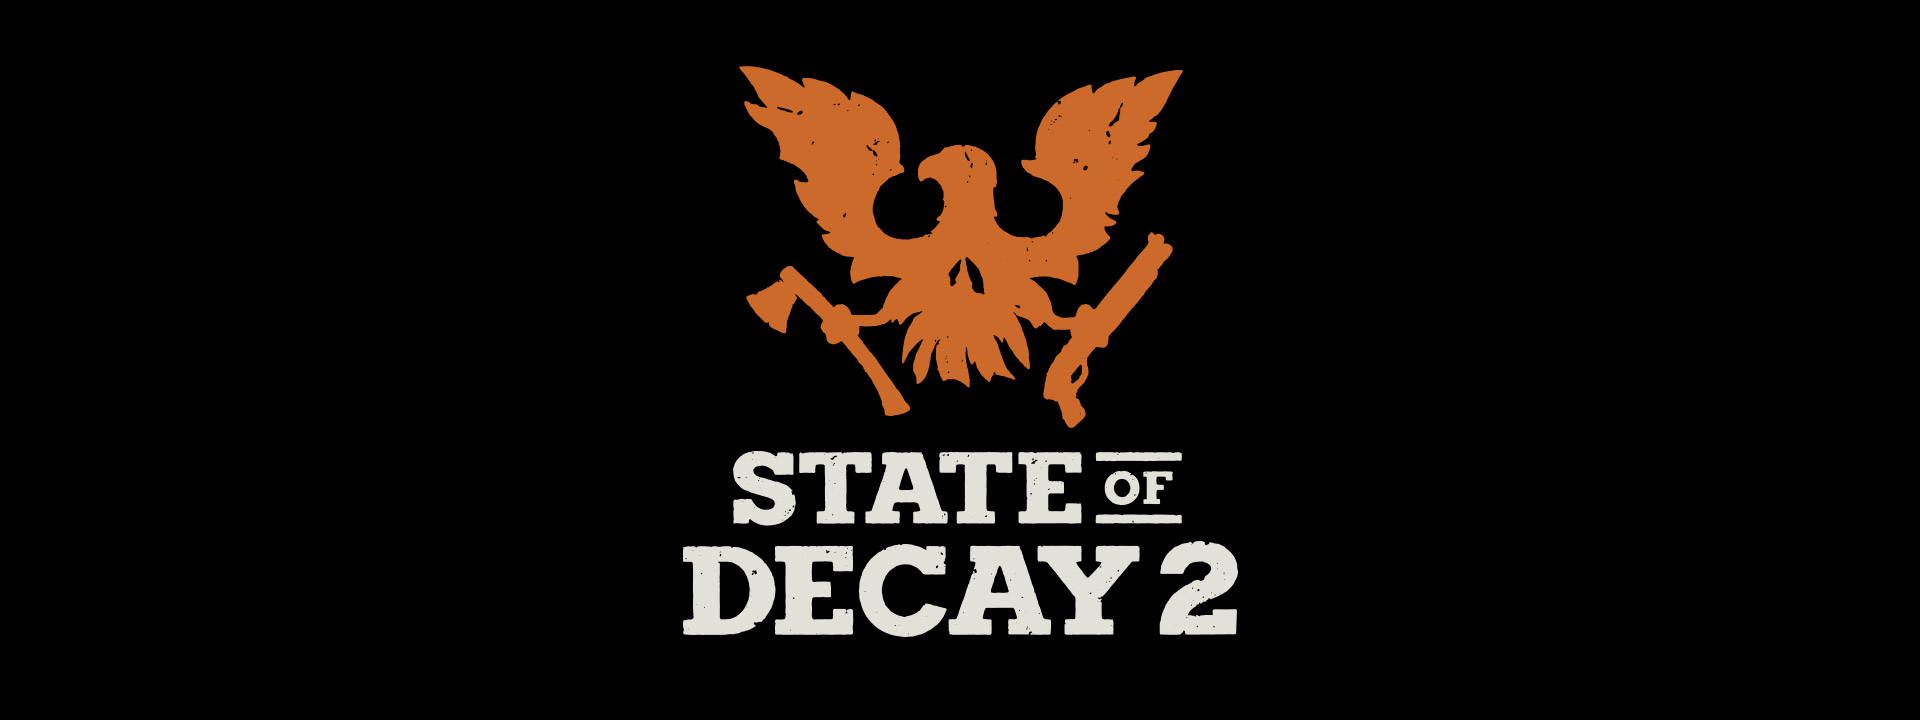 State of Decay 2 is lekker goor!